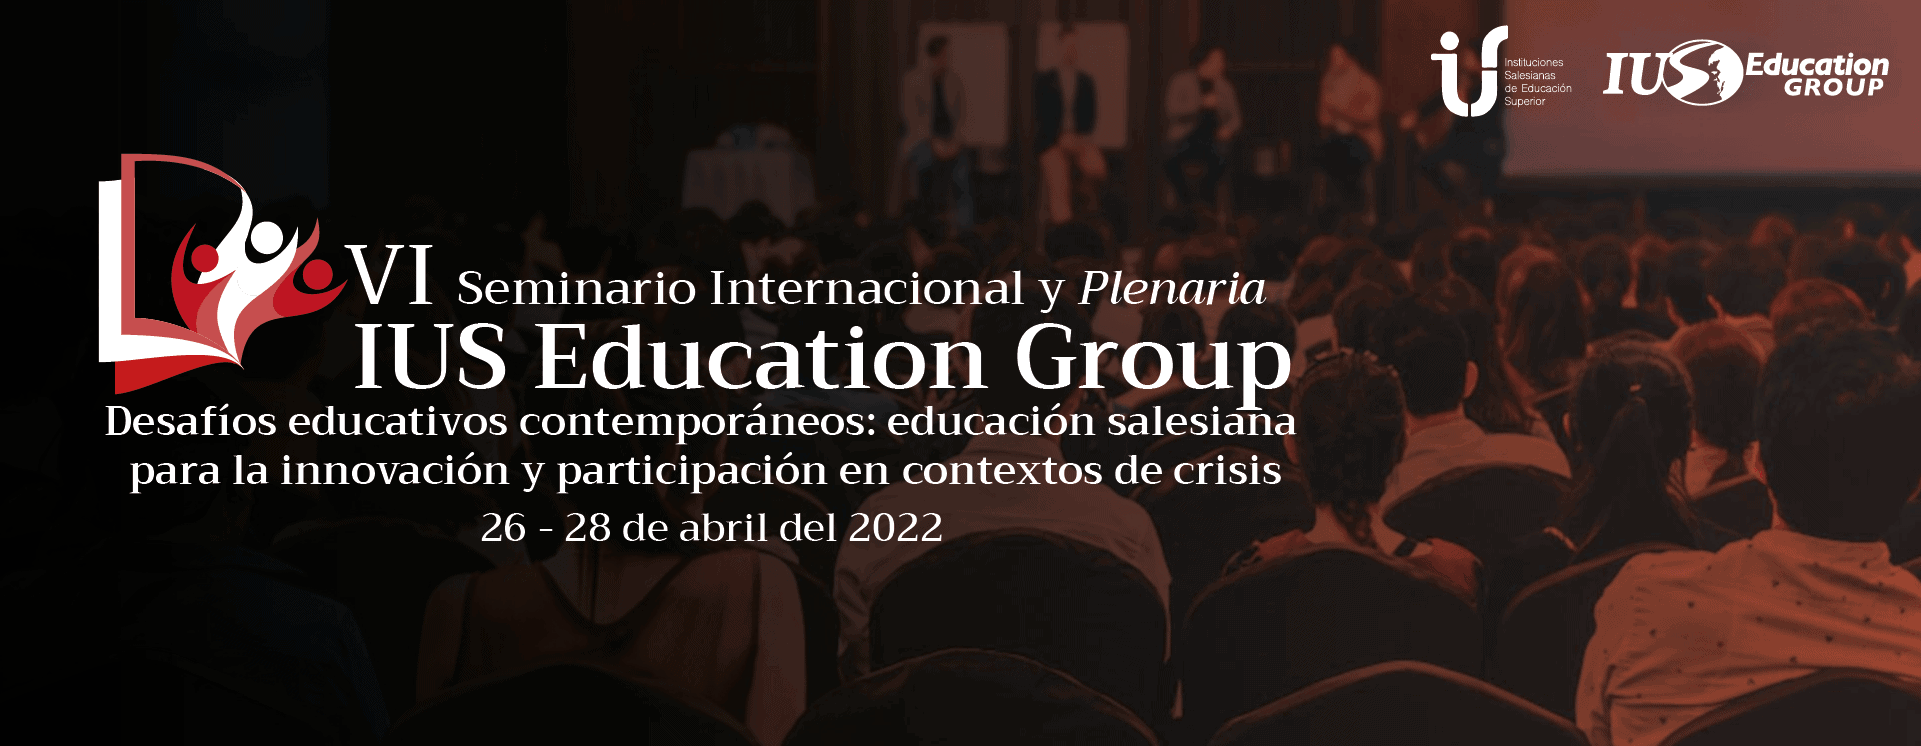 VI Seminario IUS Education Group